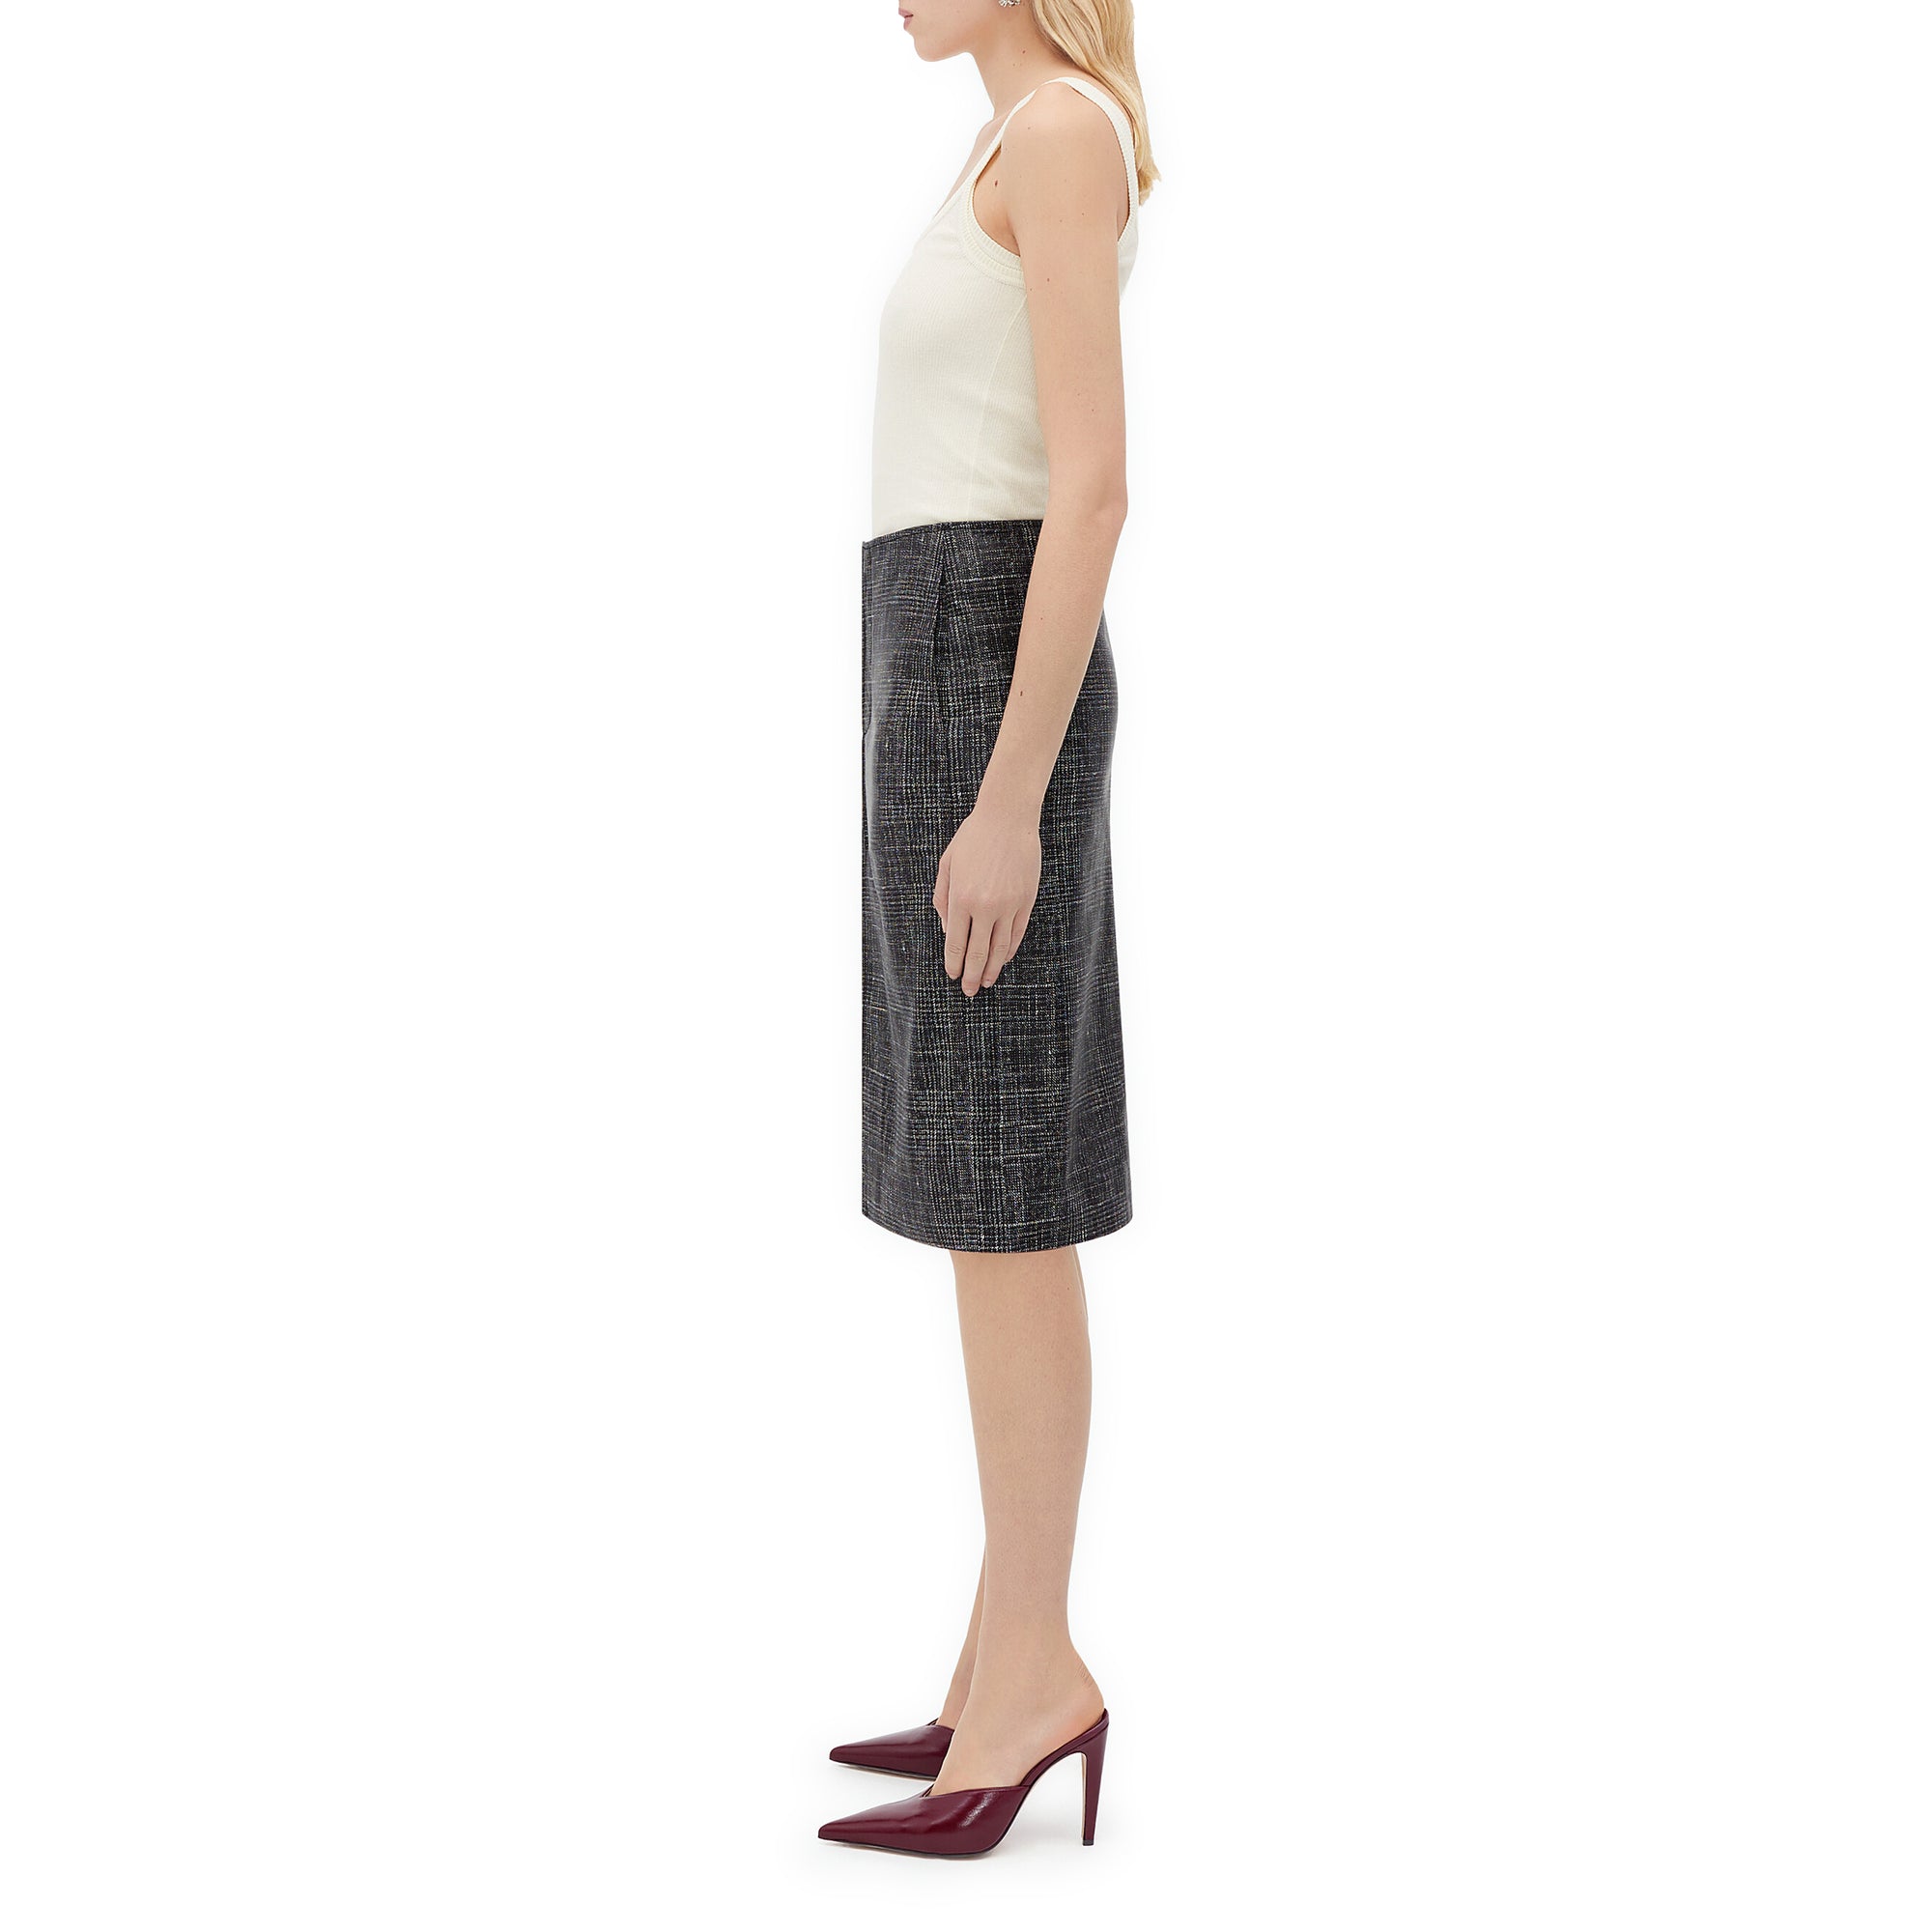 Bottega Veneta - Women’s Printed Leather Skirt - (Black/White) view 4